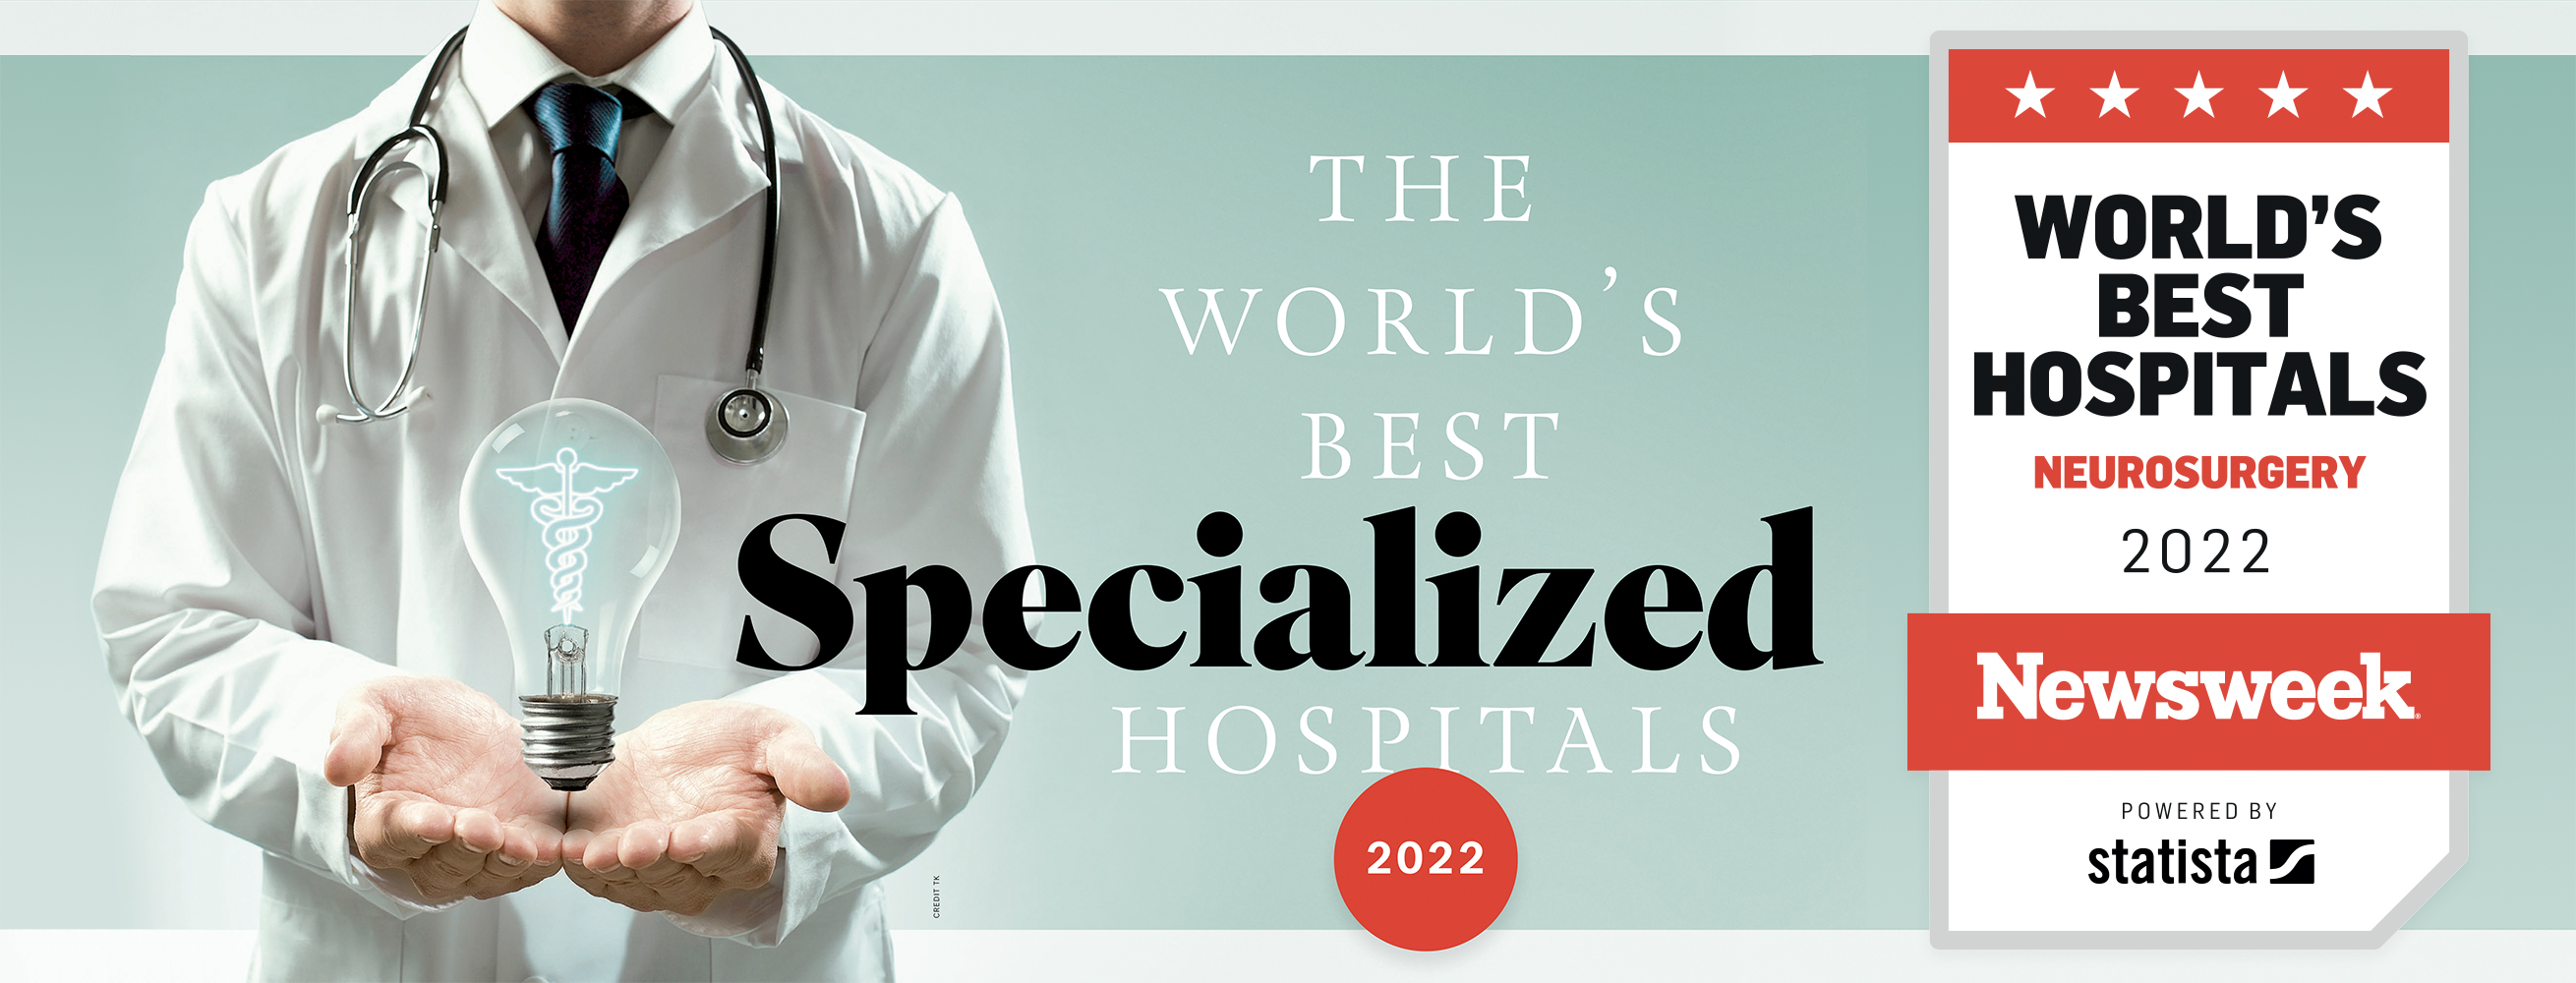 Best Specialized Hospitals 2022 - Neurosurgery